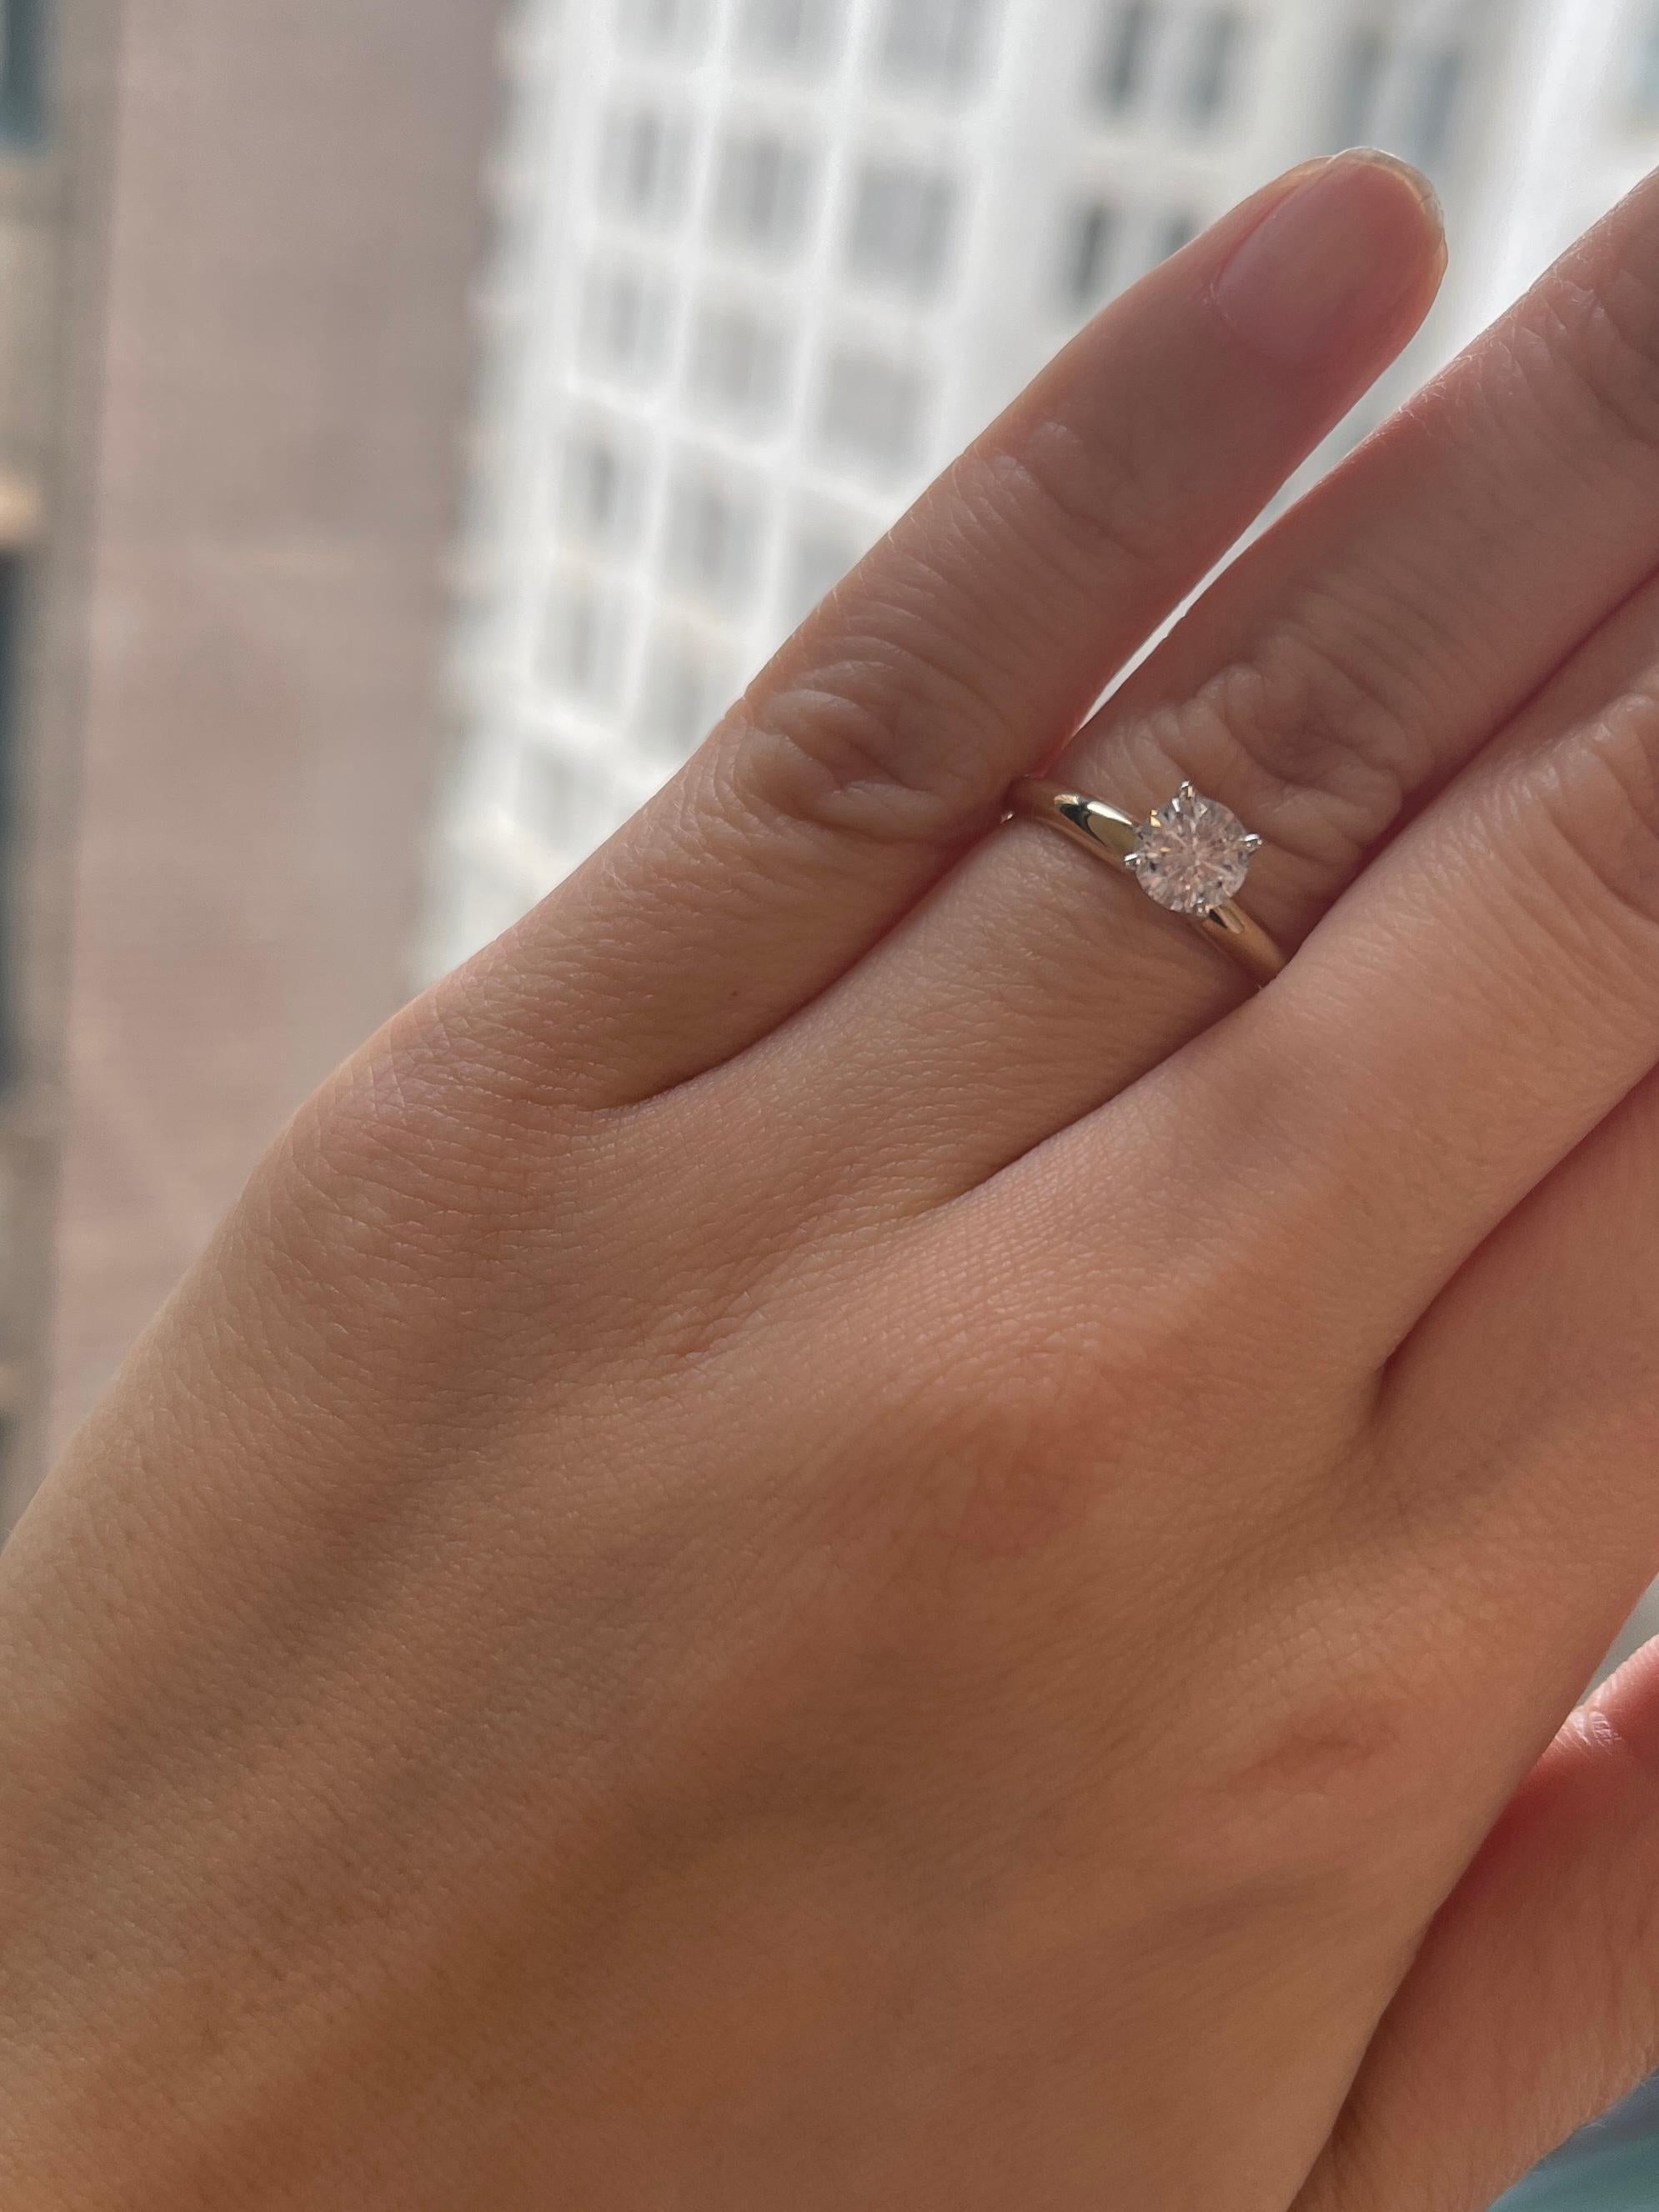 1.8 carat diamond ring on finger